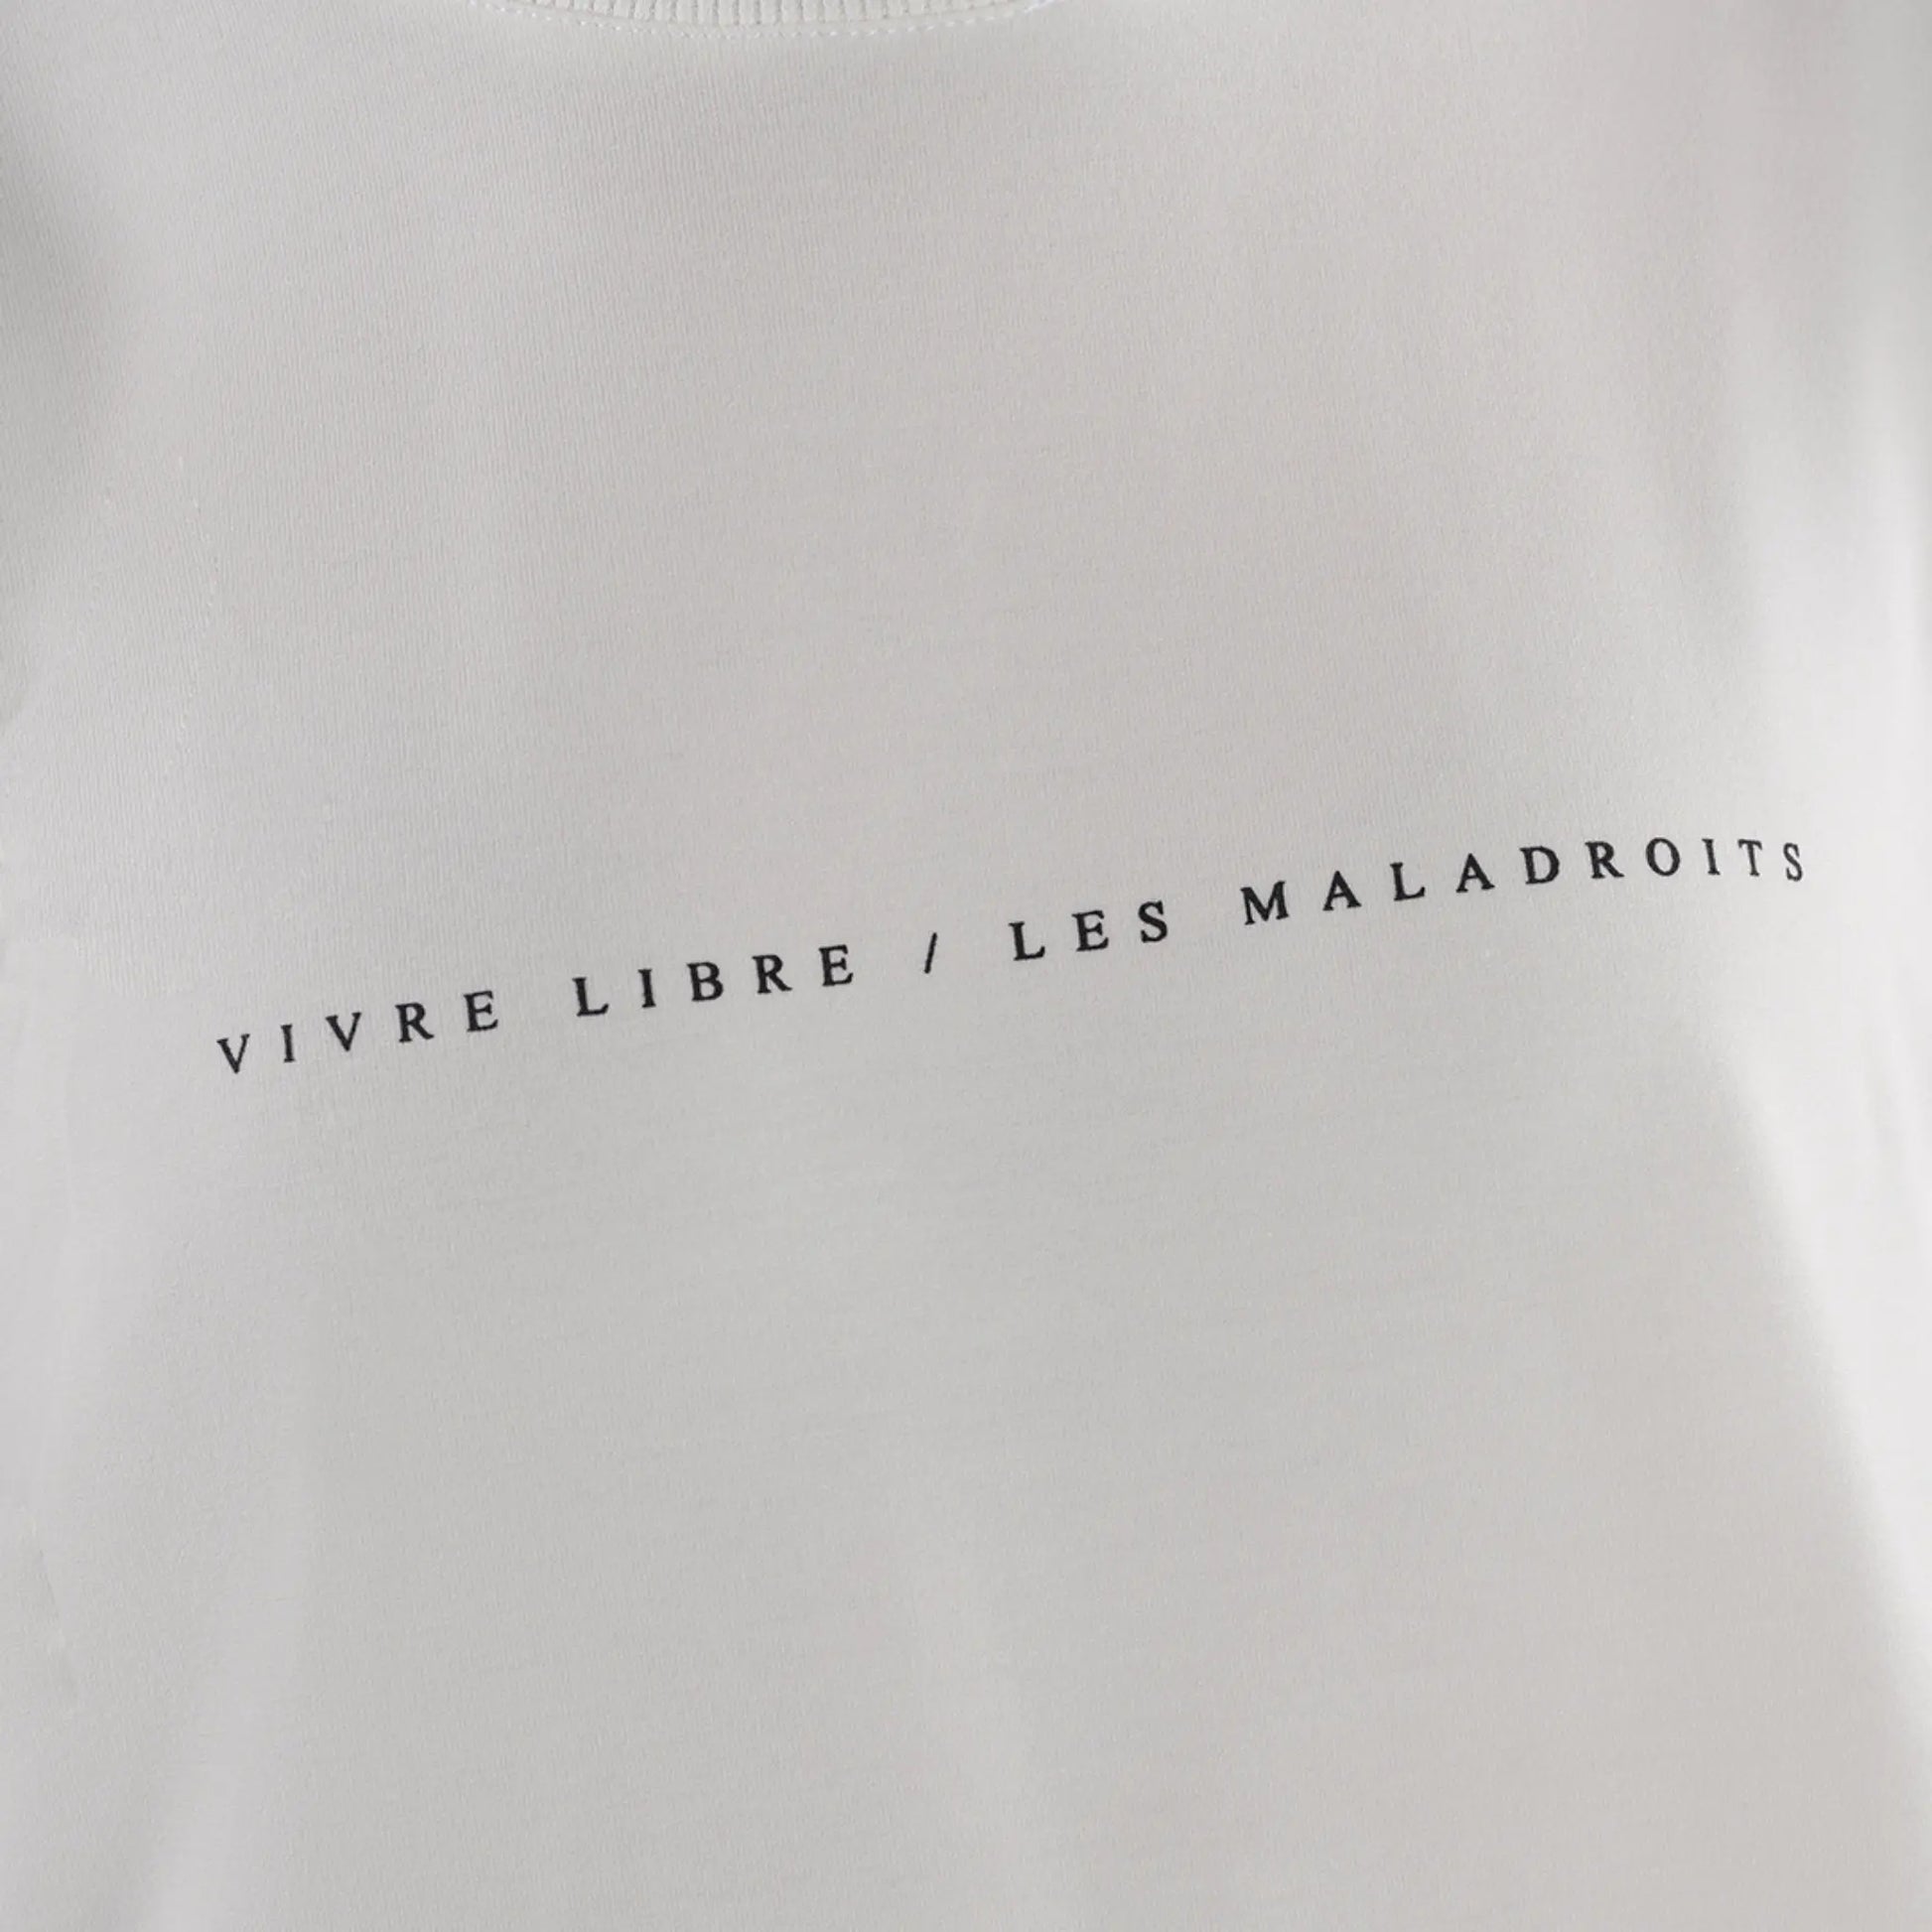 Oversized T-Shirt White Vivre Libre / Les Maladroits close-up view on the print